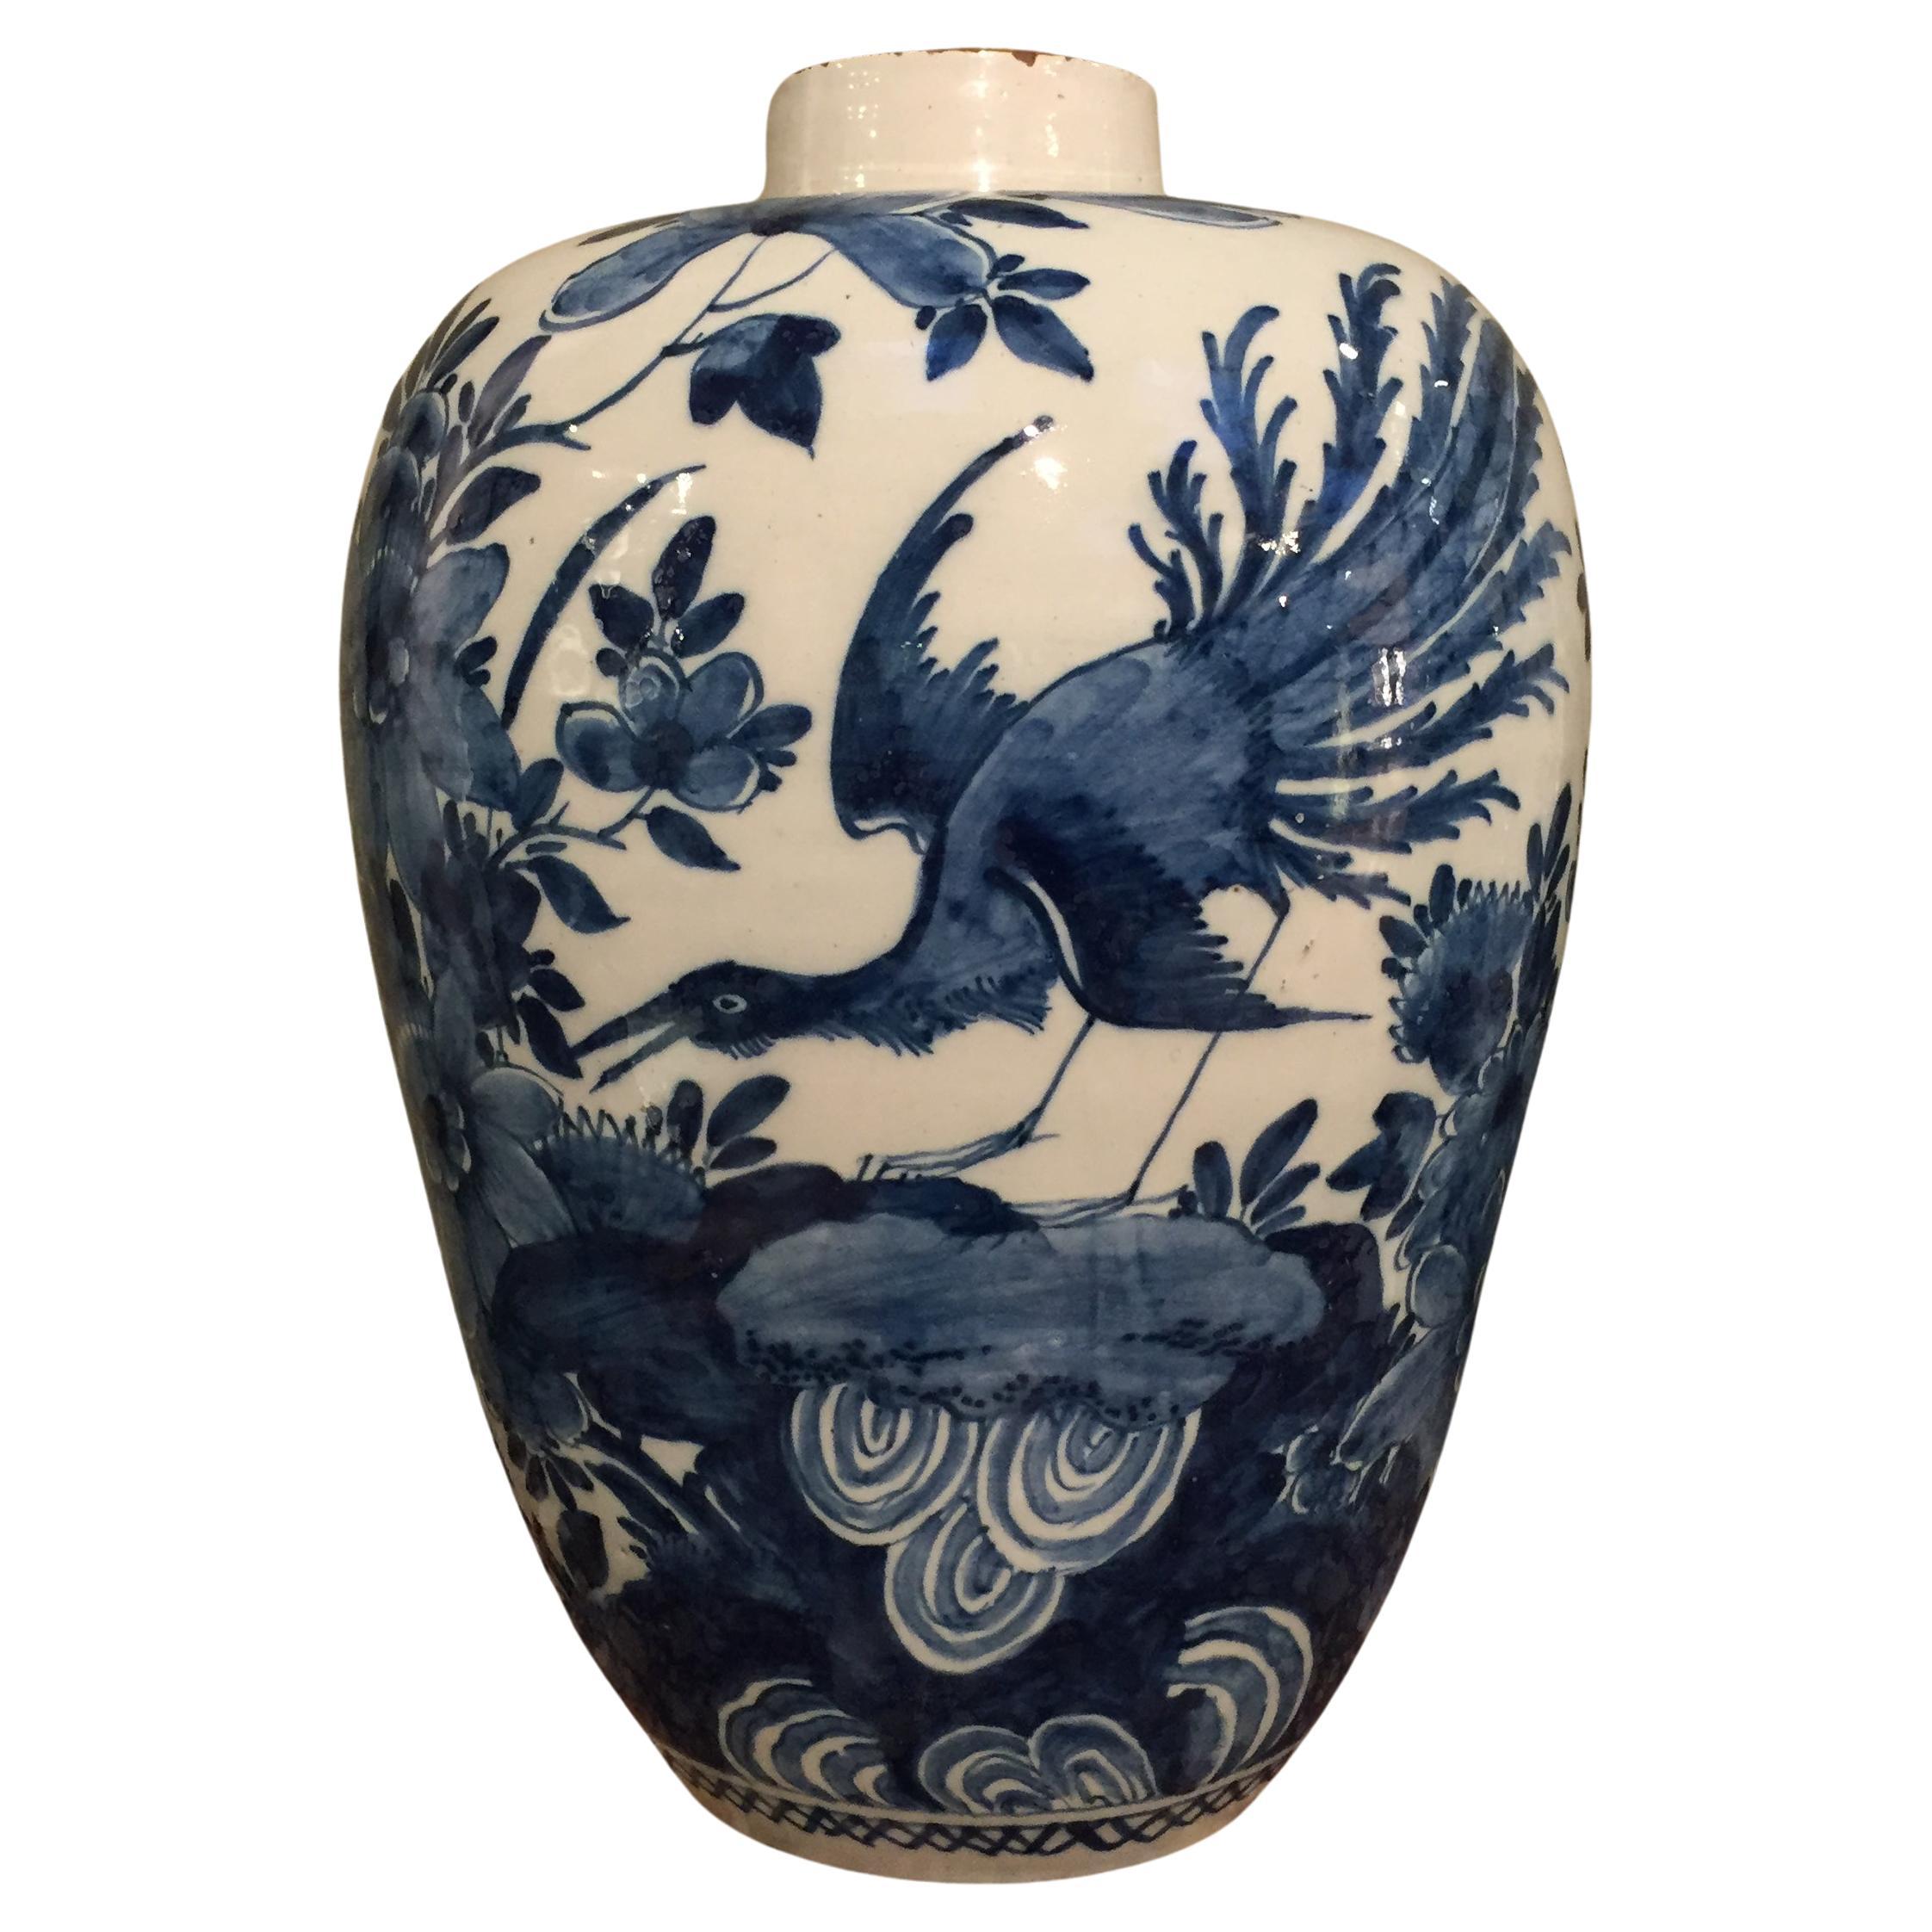 18th century Dutch Delft vase with Bird of Paradise